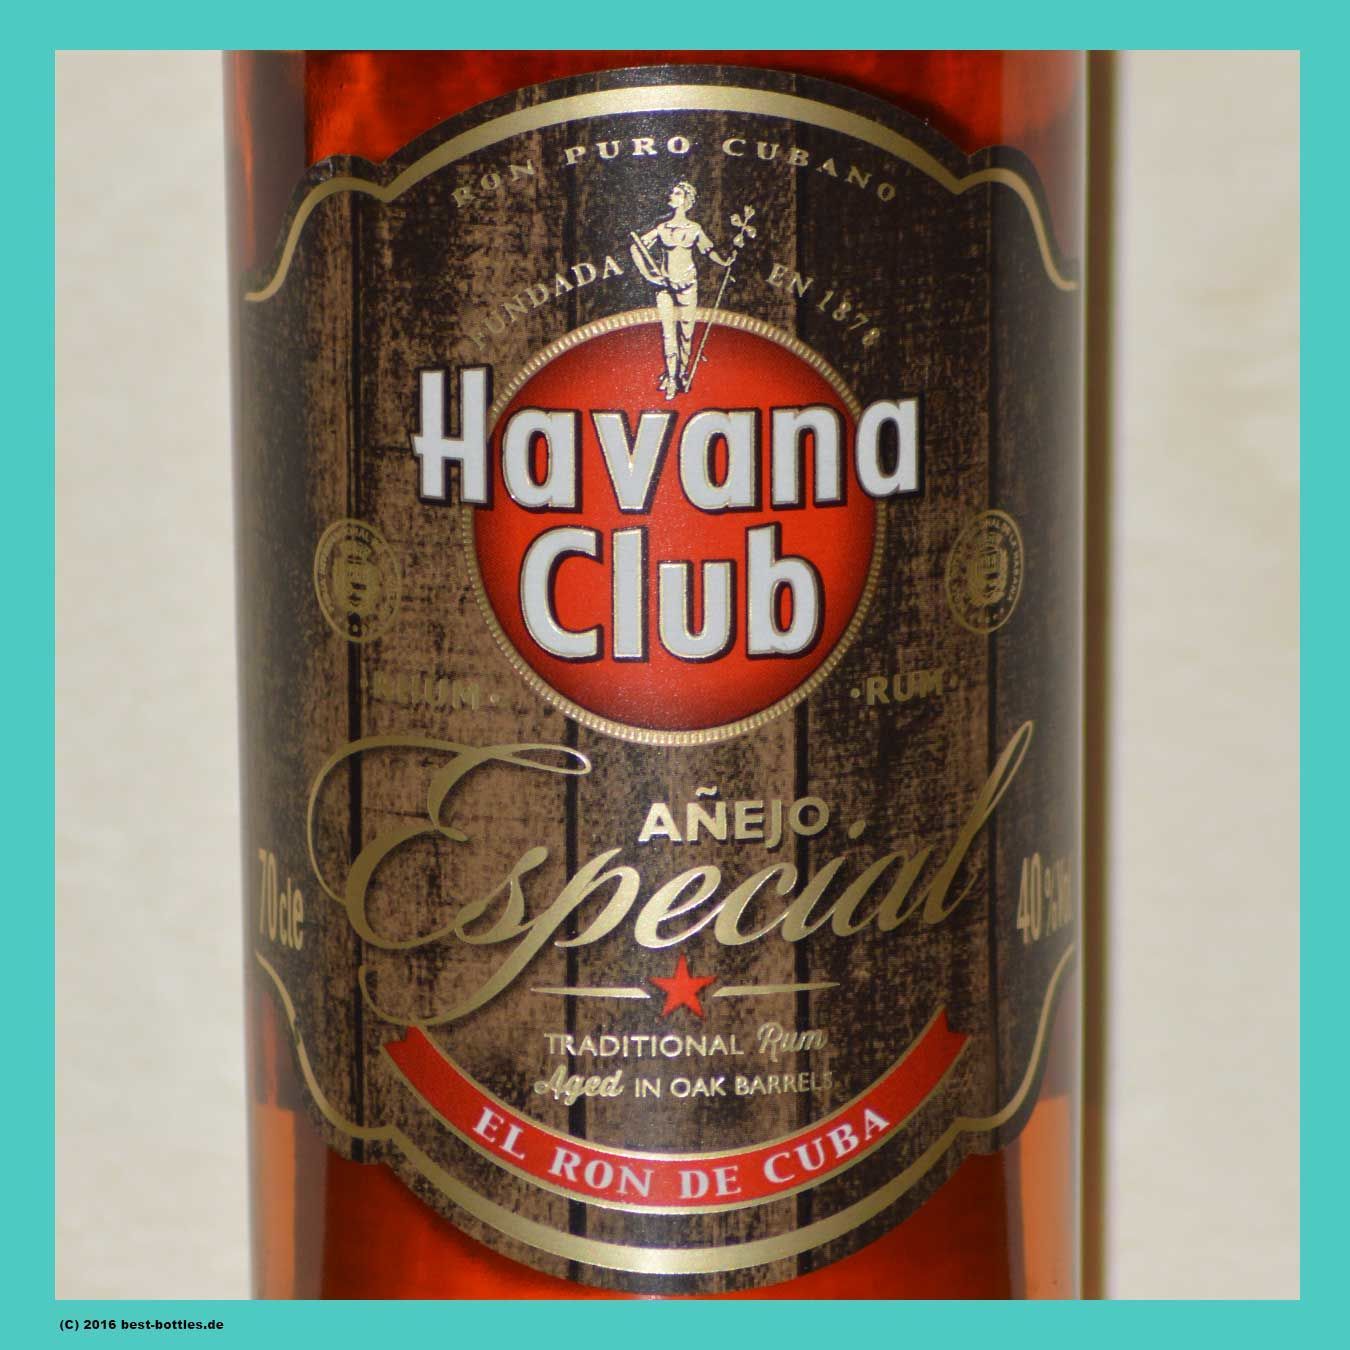 Havana Club Añejo Especial 0,7 l RUM